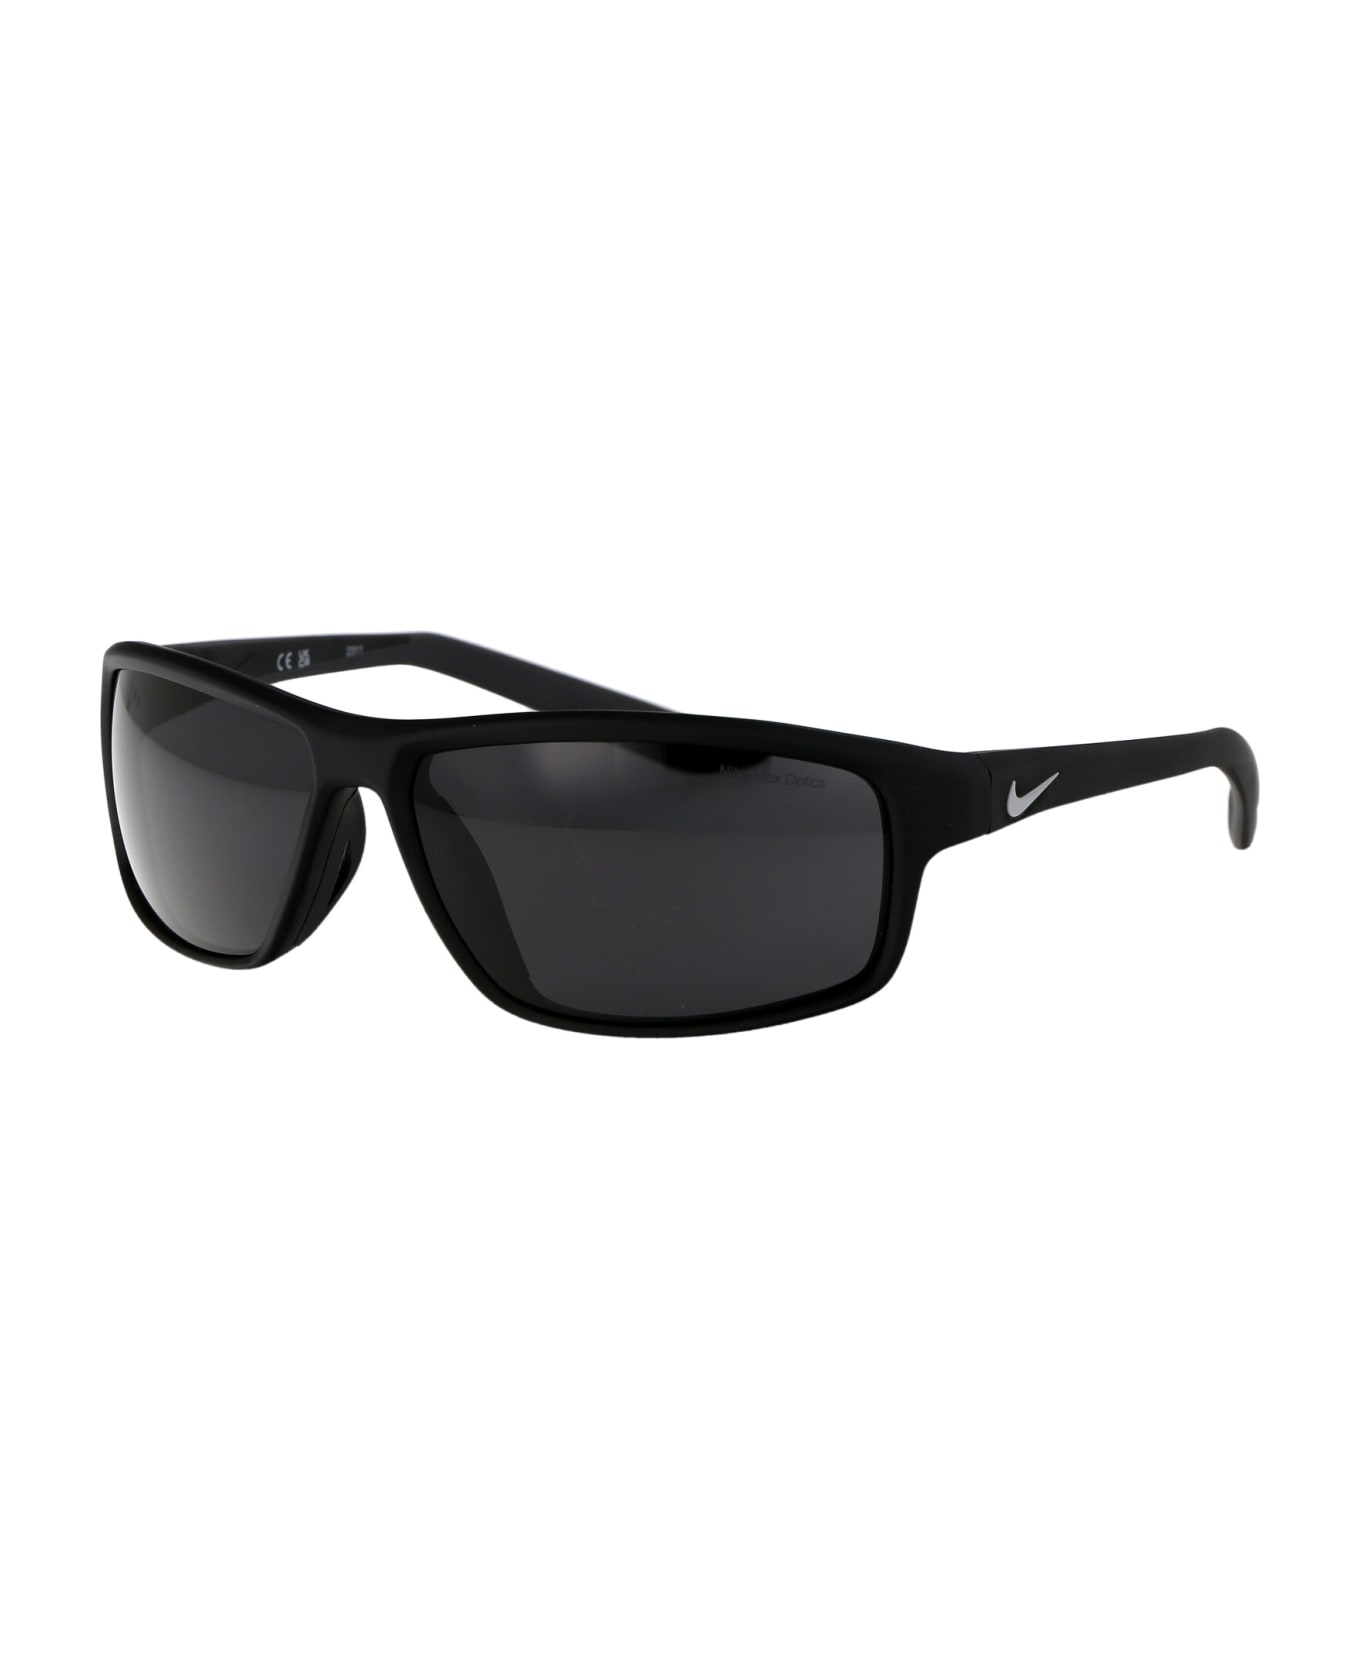 Nike Rabid 22 Sunglasses - 010 DARK GREY BLACK/ WOLF GREY サングラス